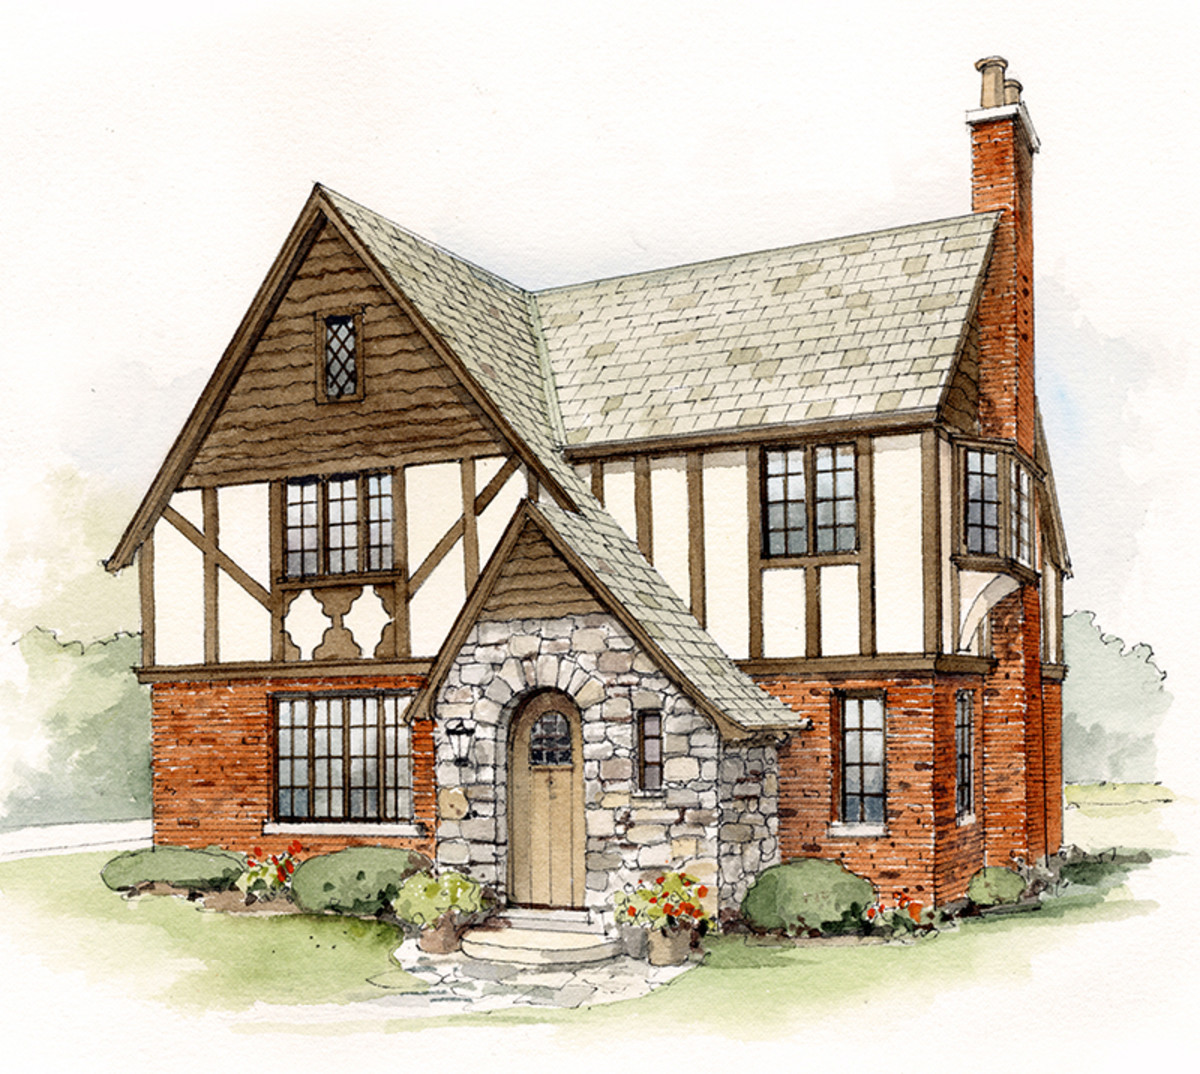 Tudor Revival style home